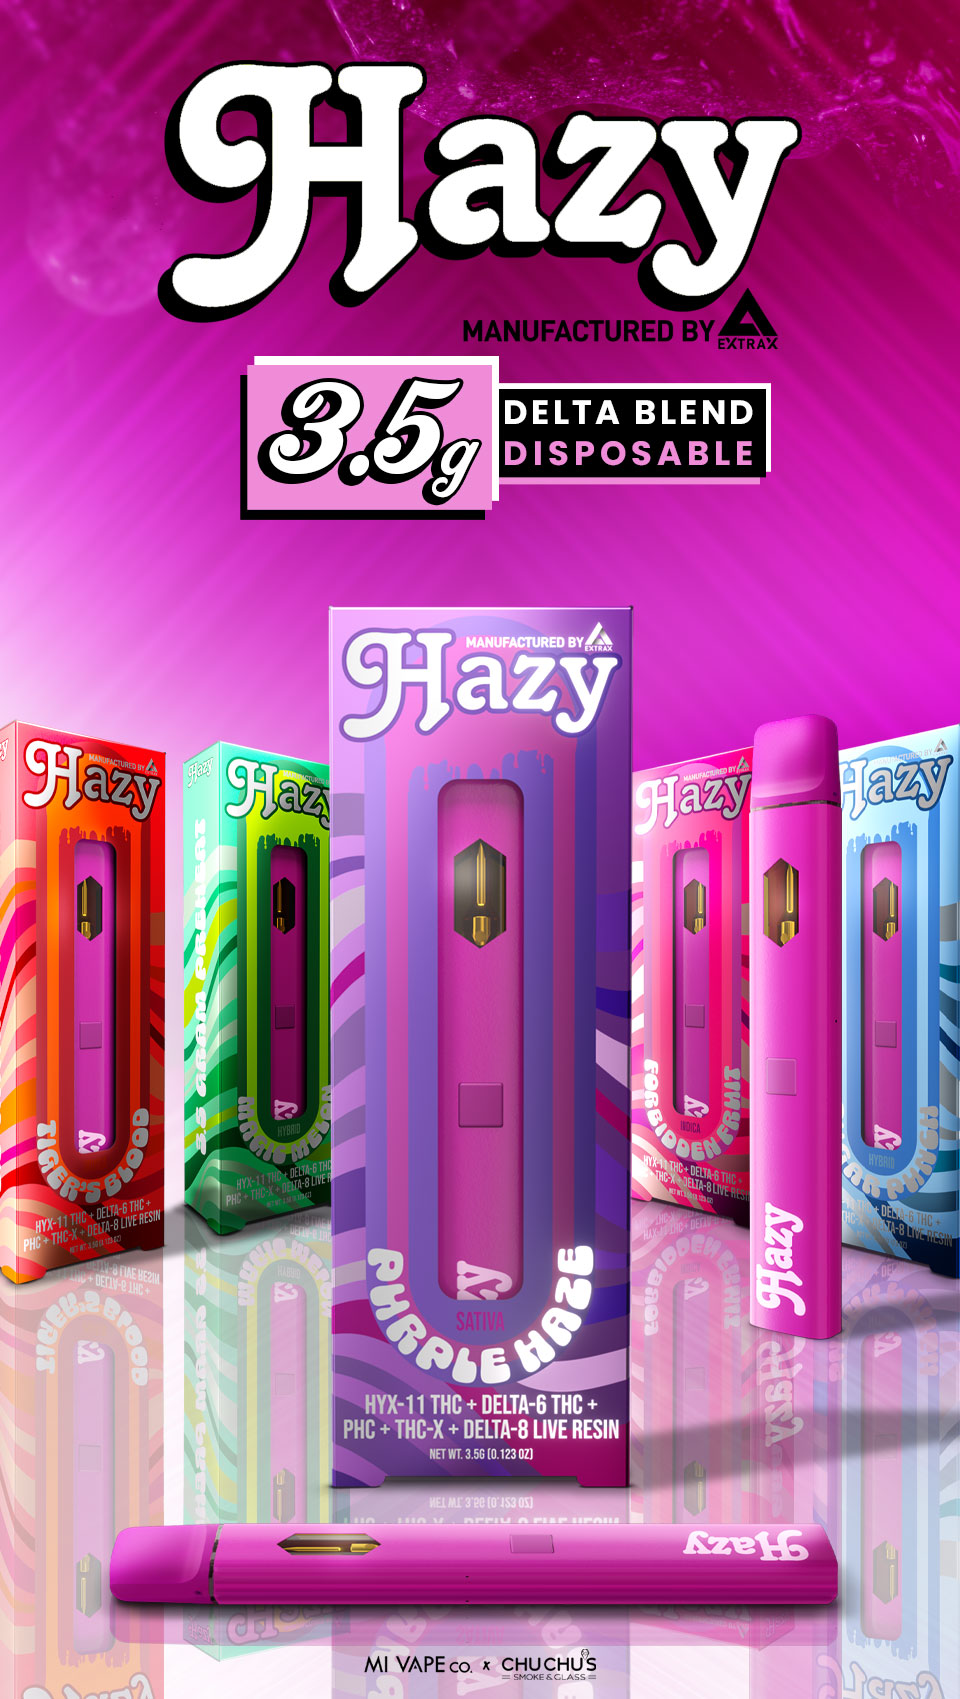 mi vape co hazy 3.5g delta blend disposable image banner